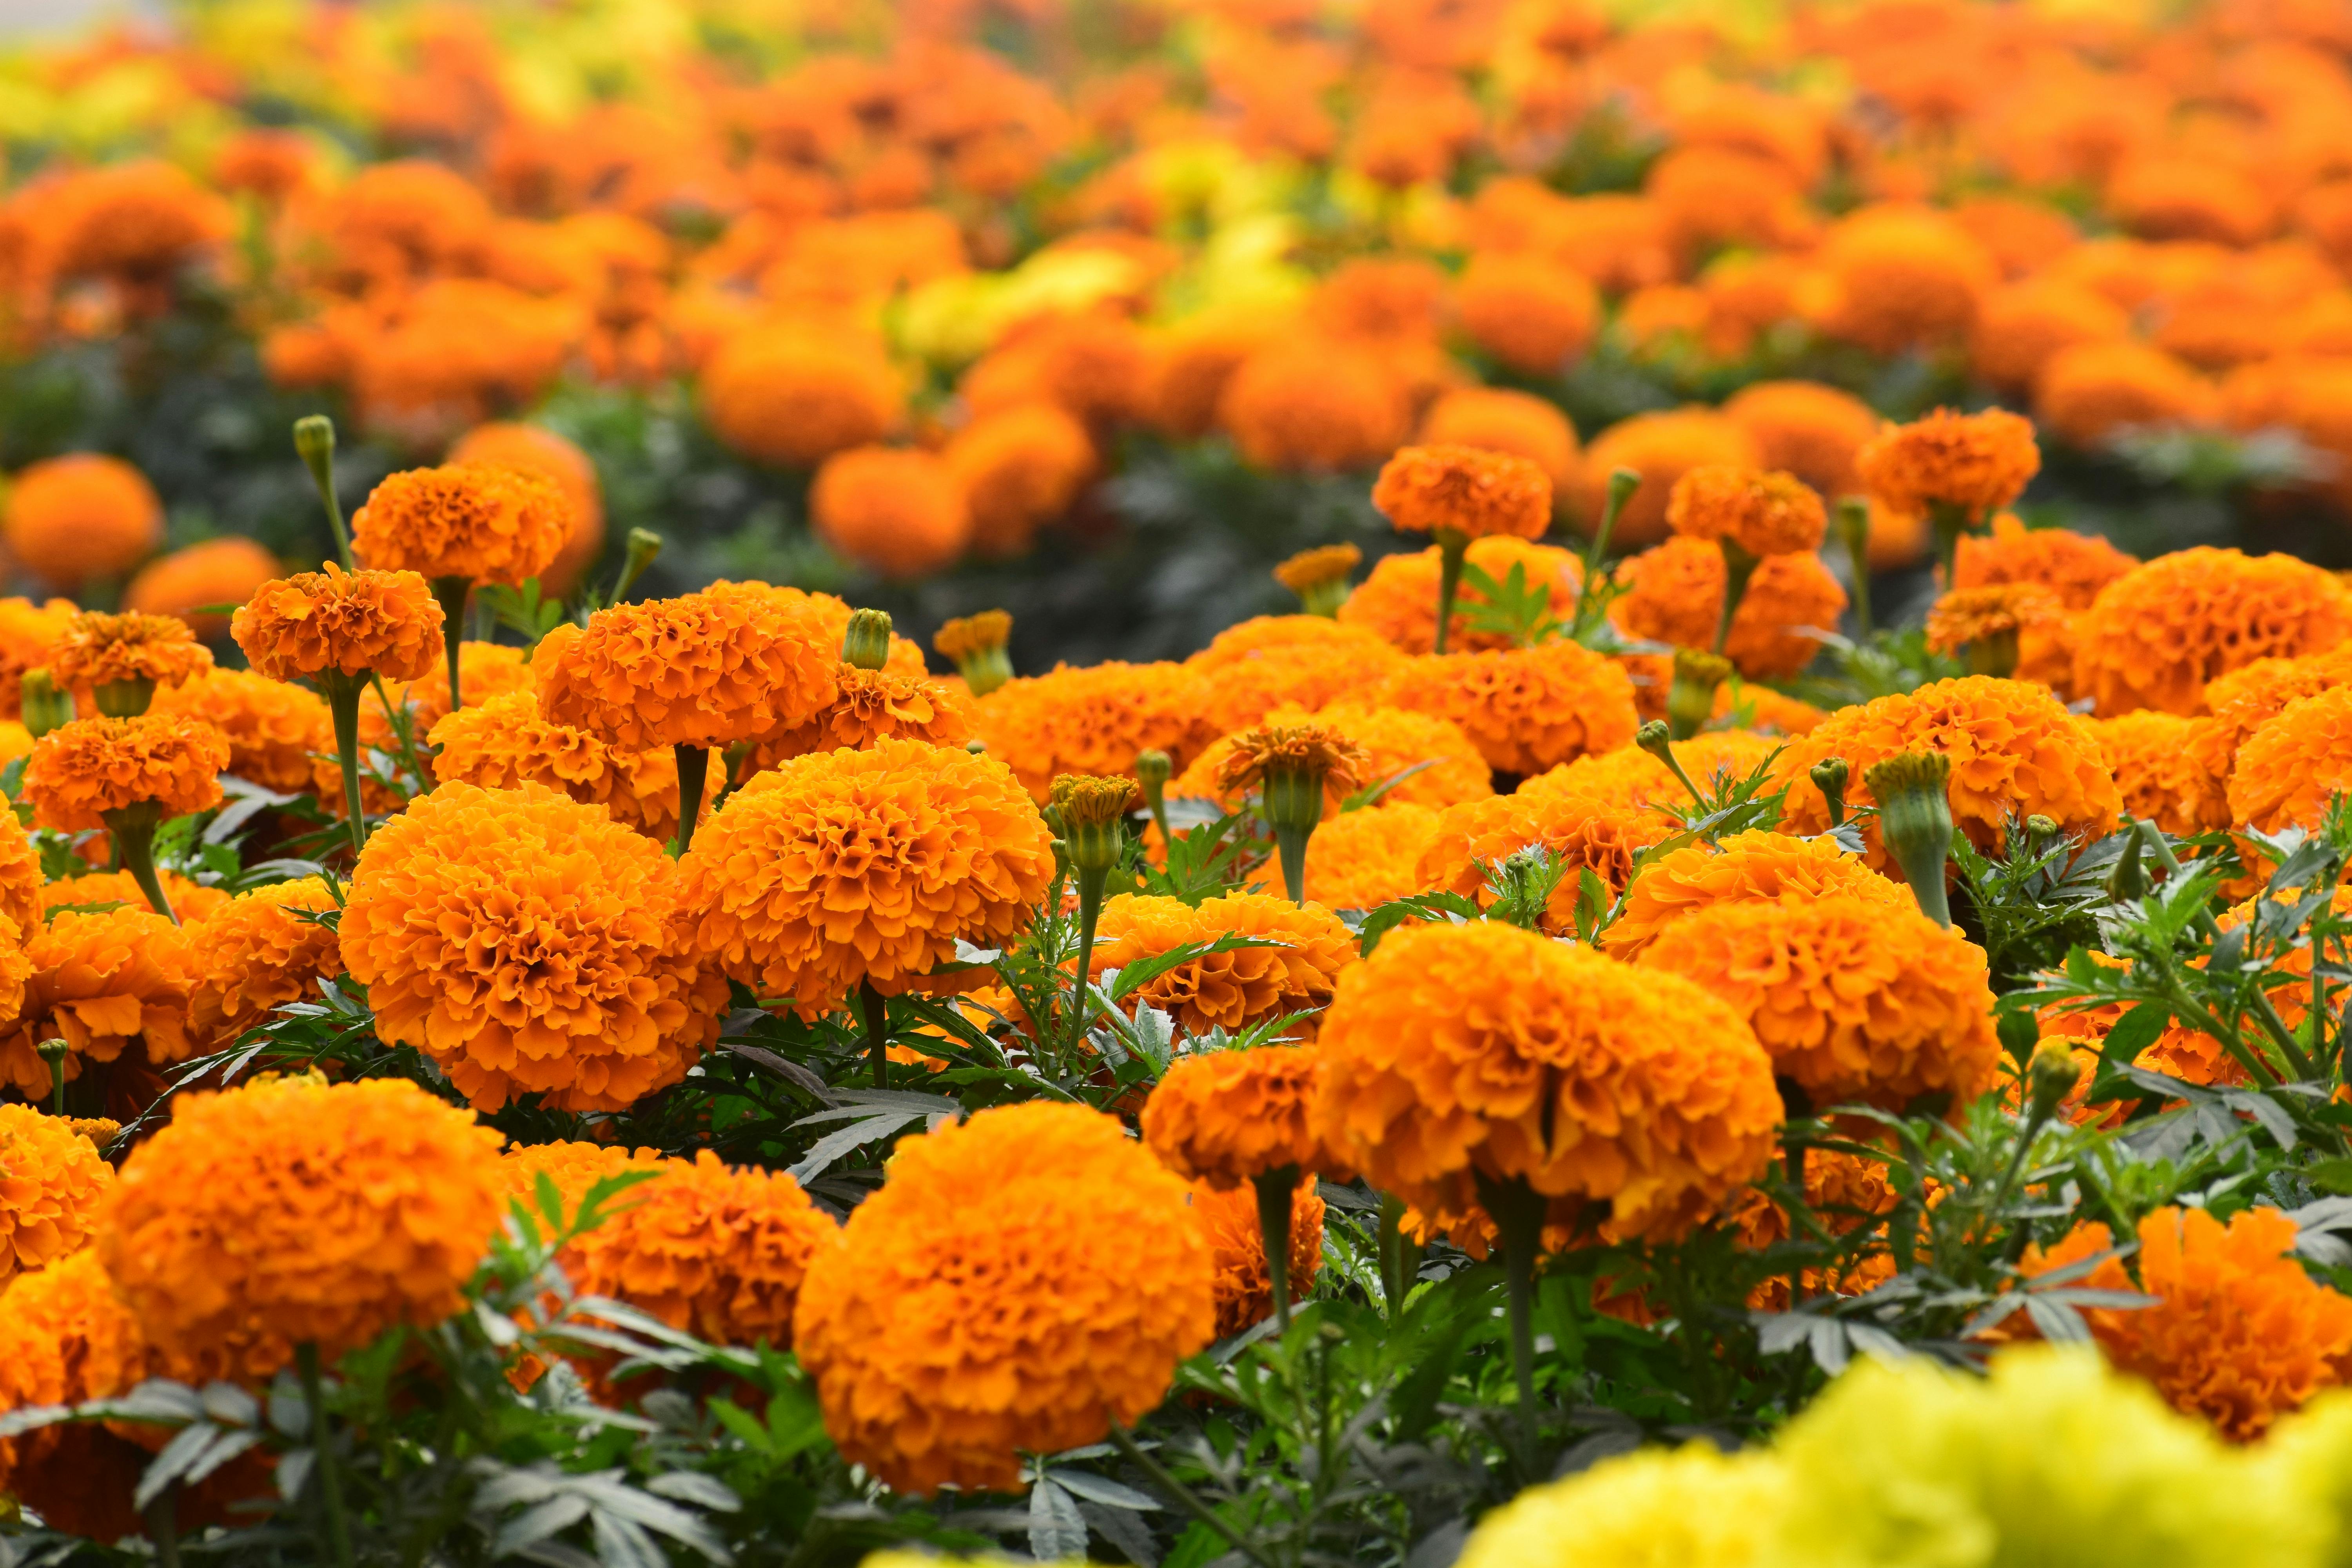 Orange Flowers Photos, Download The BEST Free Orange Flowers Stock Photos &  HD Images